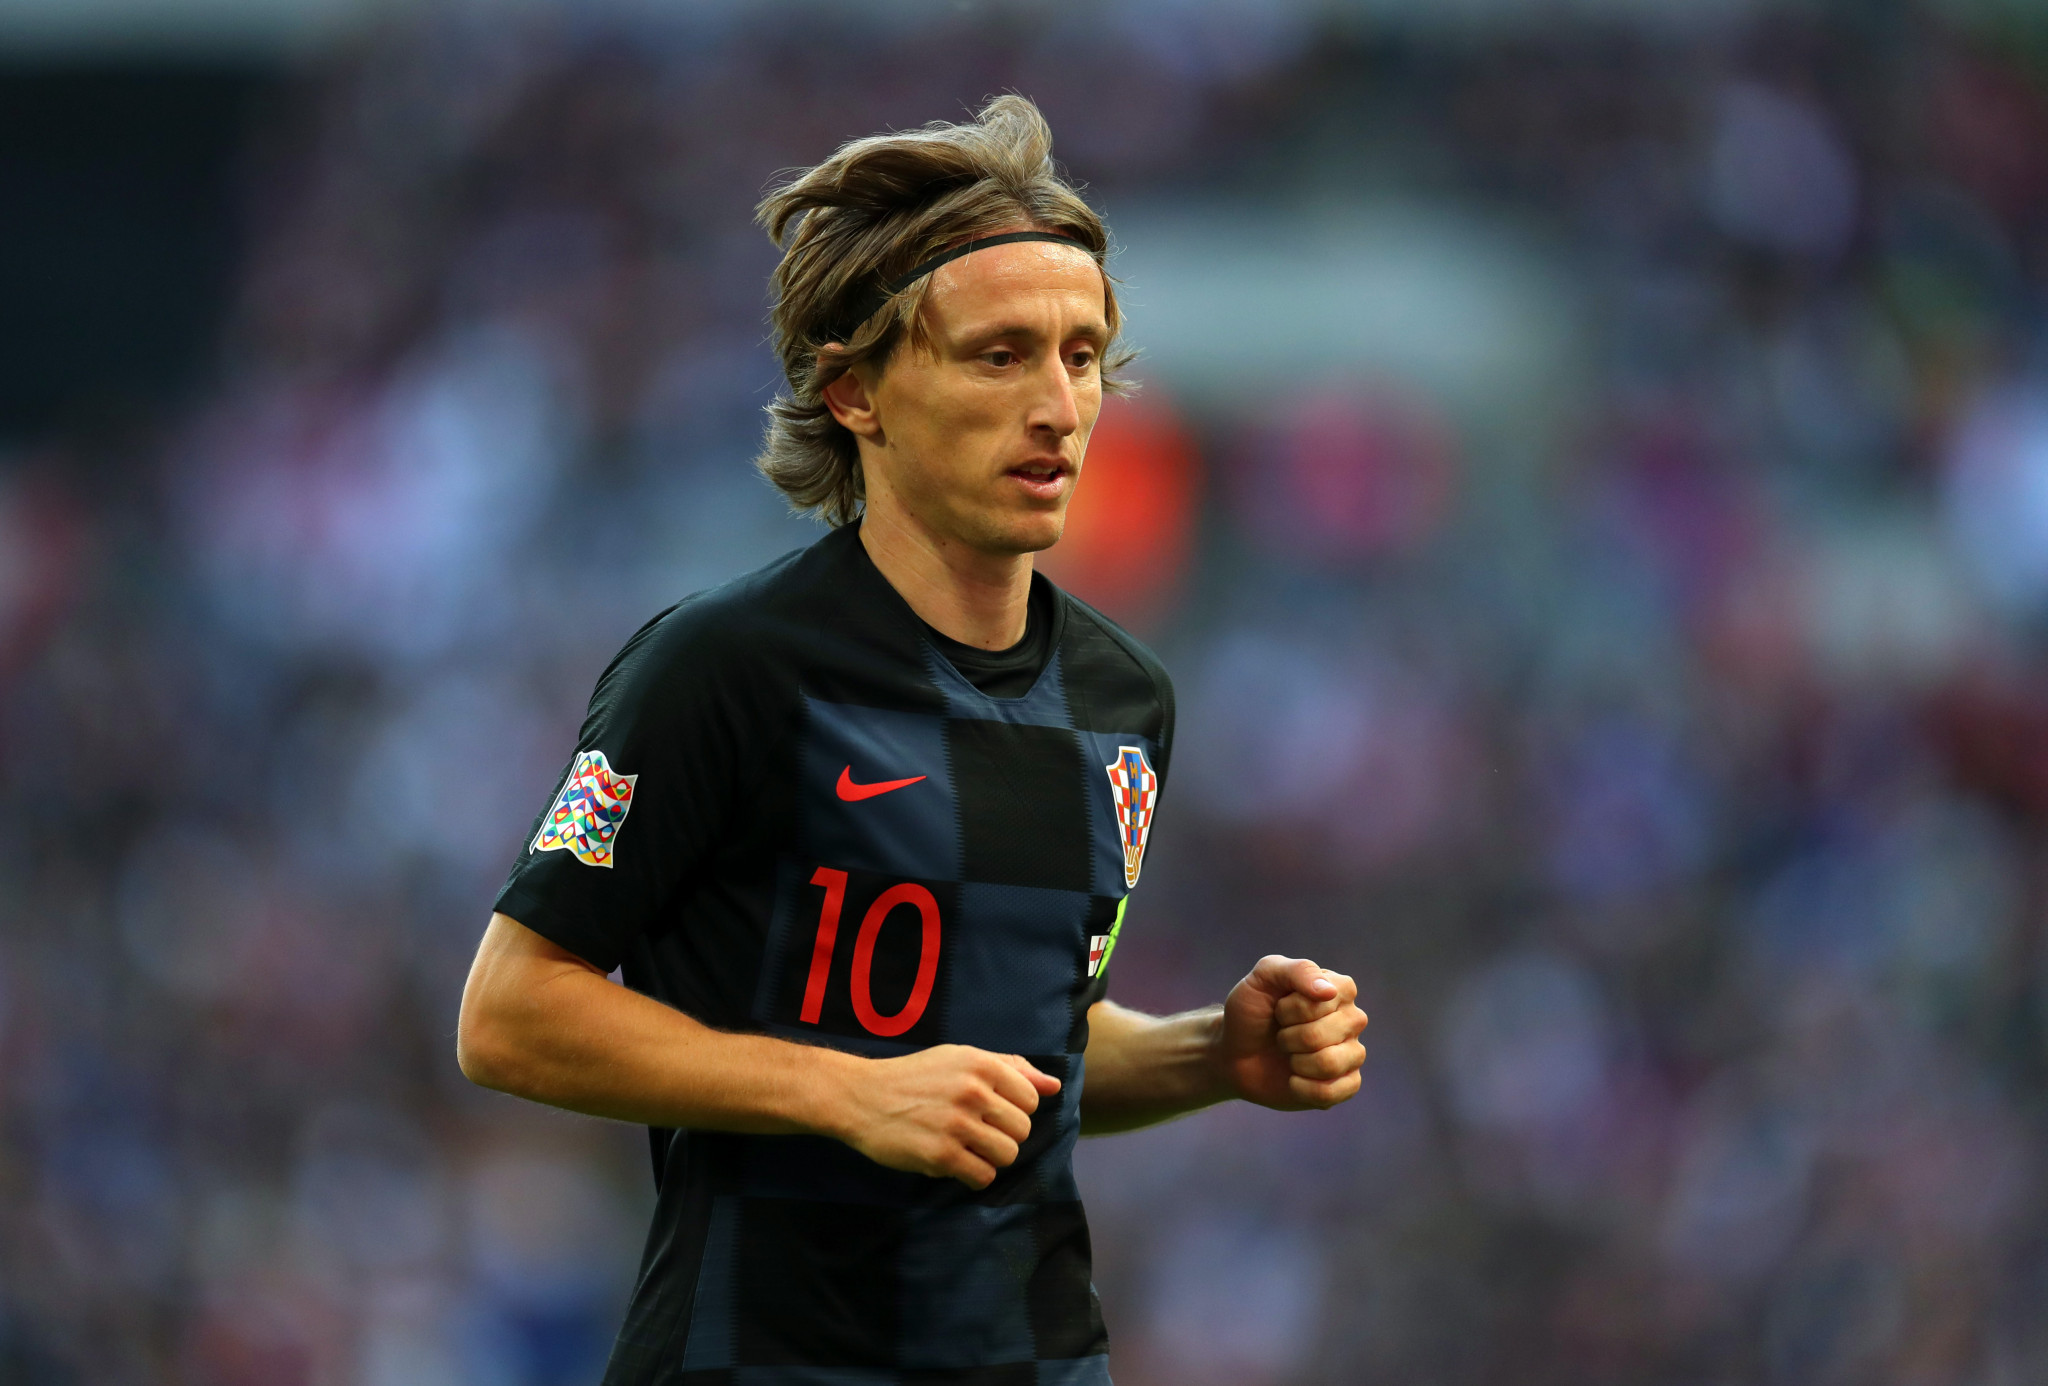 Footballer Luka Modric won the men's athlete of the year award ©Getty Images